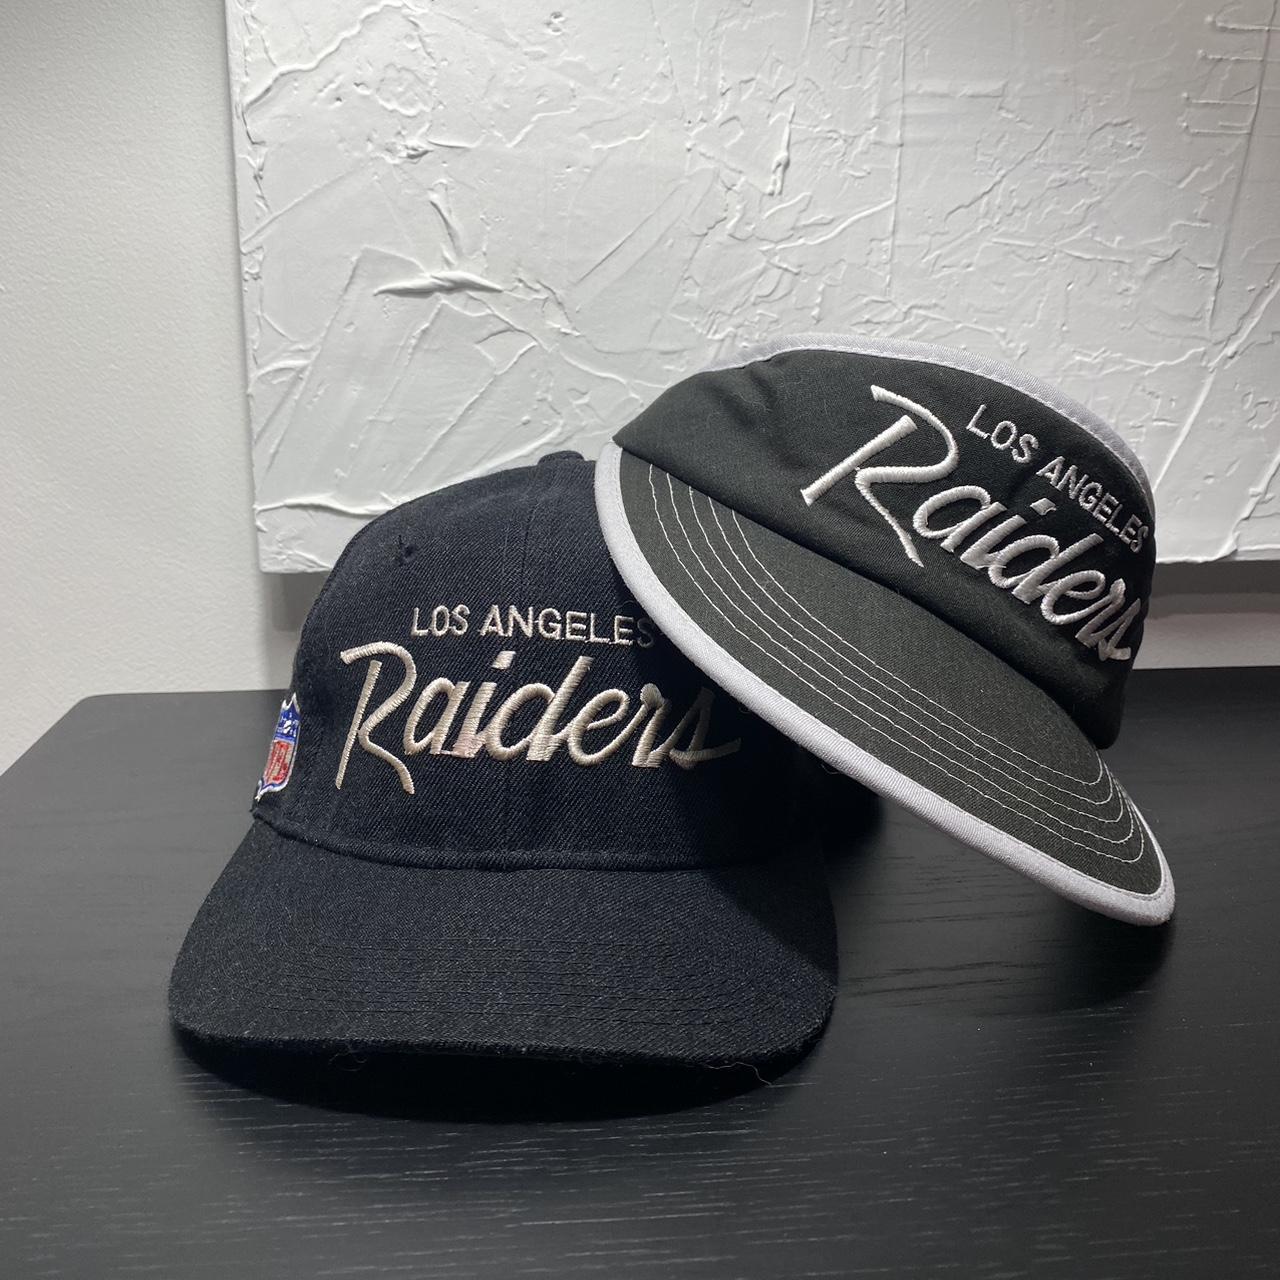 Vintage Los Angeles Raiders Sports Specialties Snapback Hat